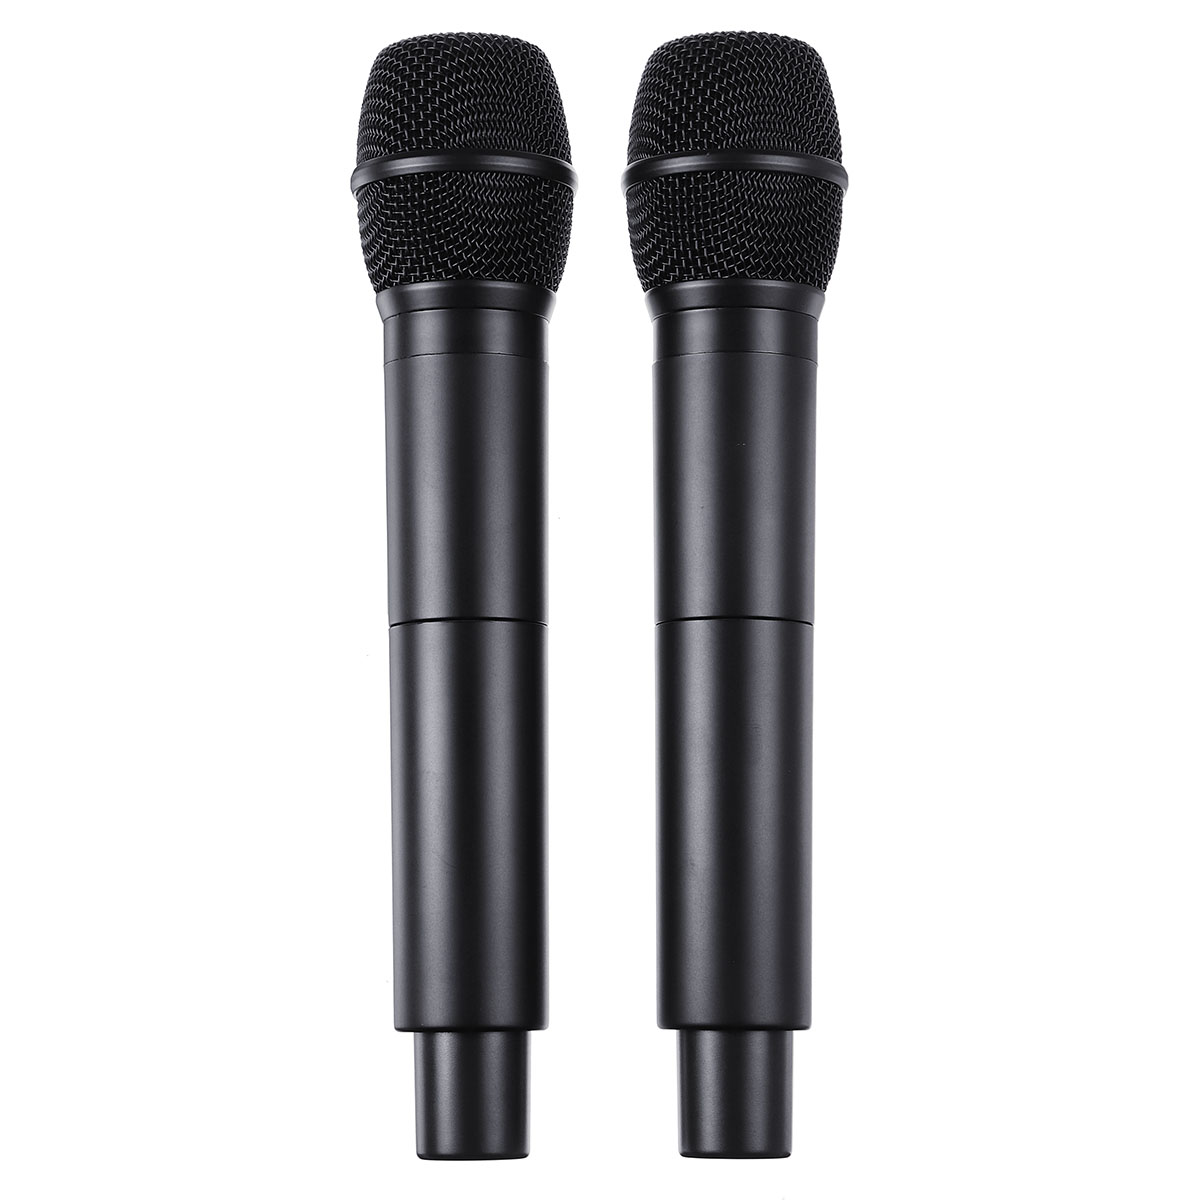 V2020-VHF-Wireless-Microphone-System-Cordless-Dual-Handheld-Mic-Karaoke-Singing-1655166